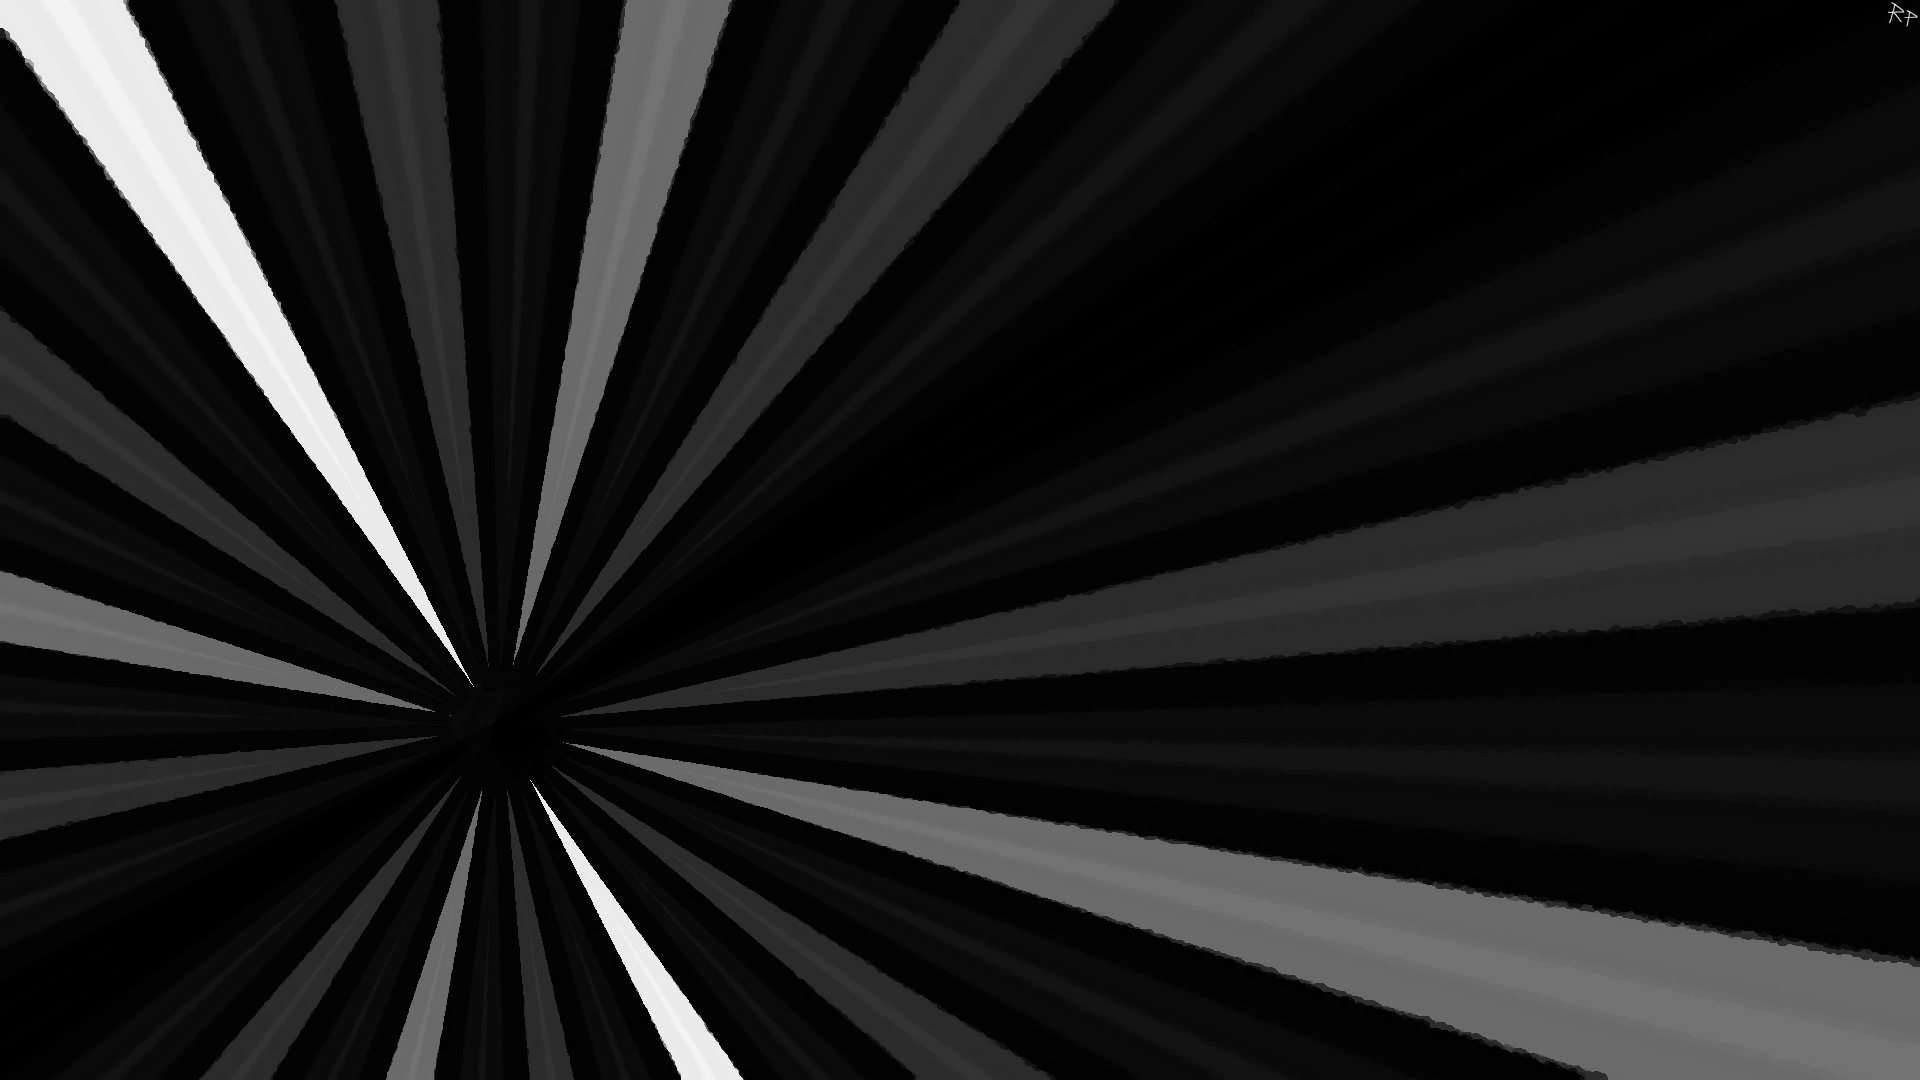 Fond d'ecran Rayons noir et blanc